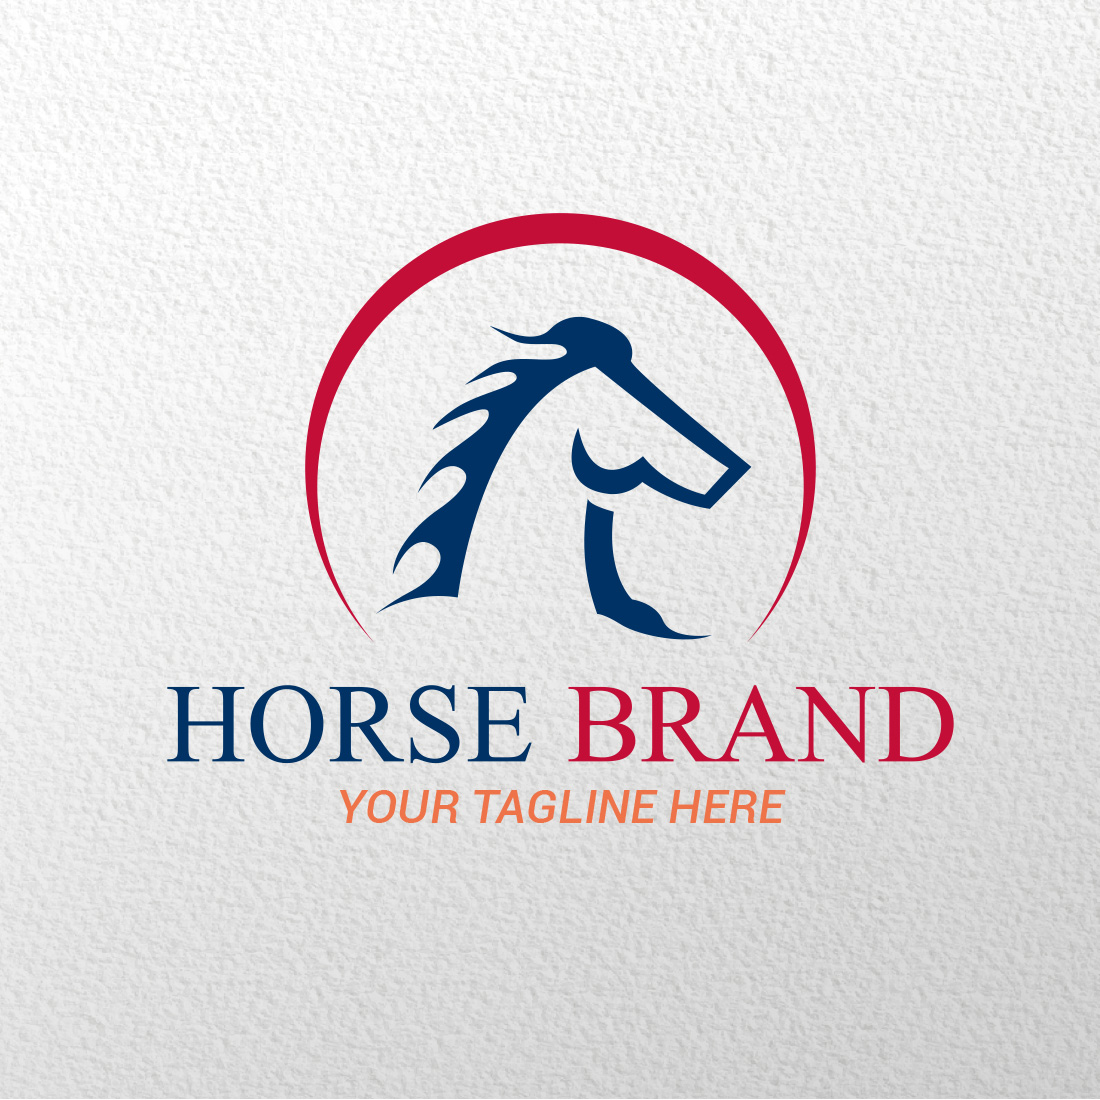 Horse brand logo design preview image.